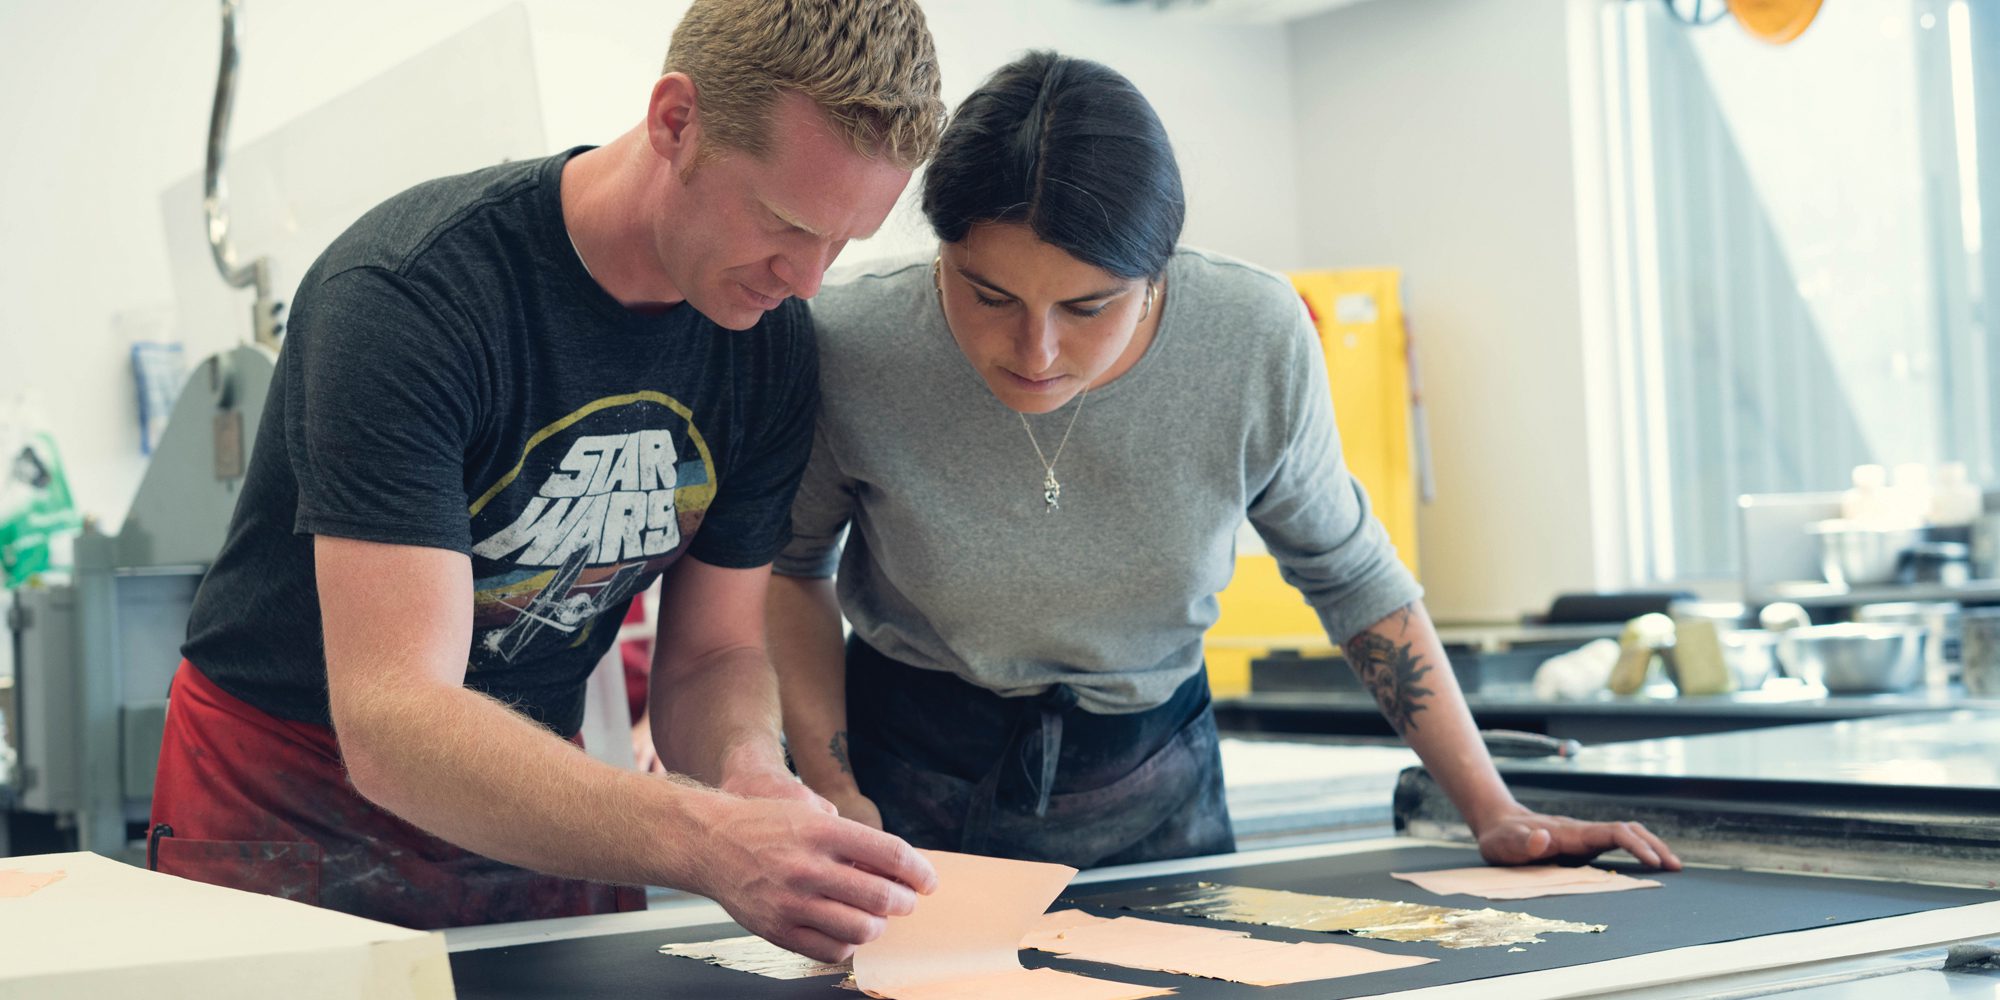 Brandon Gunn and a woman work on prints in a studio.